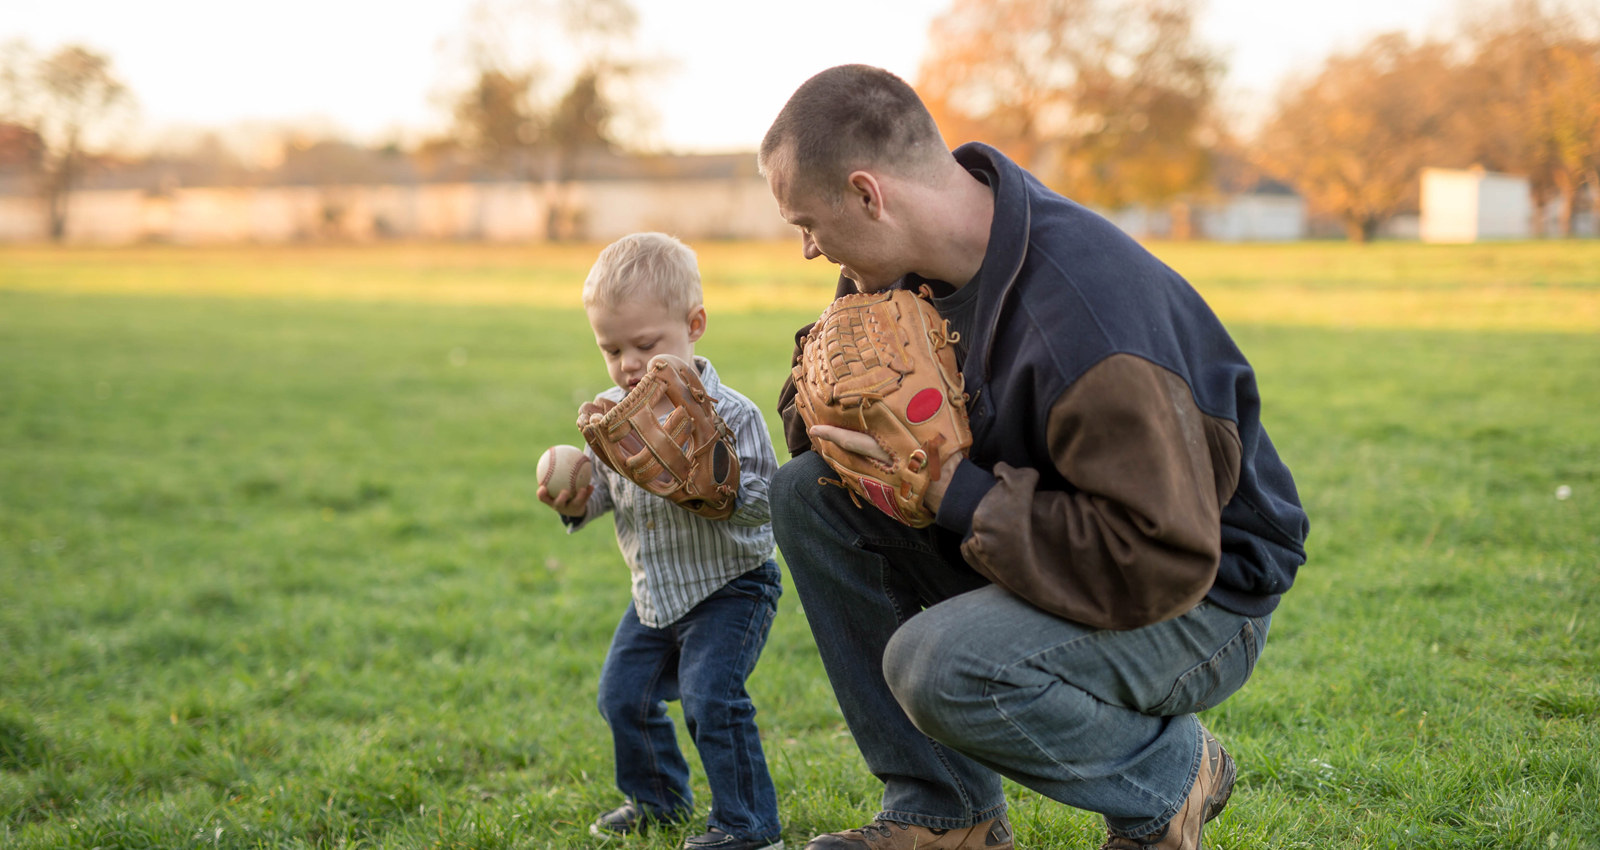 father and child playing baseball